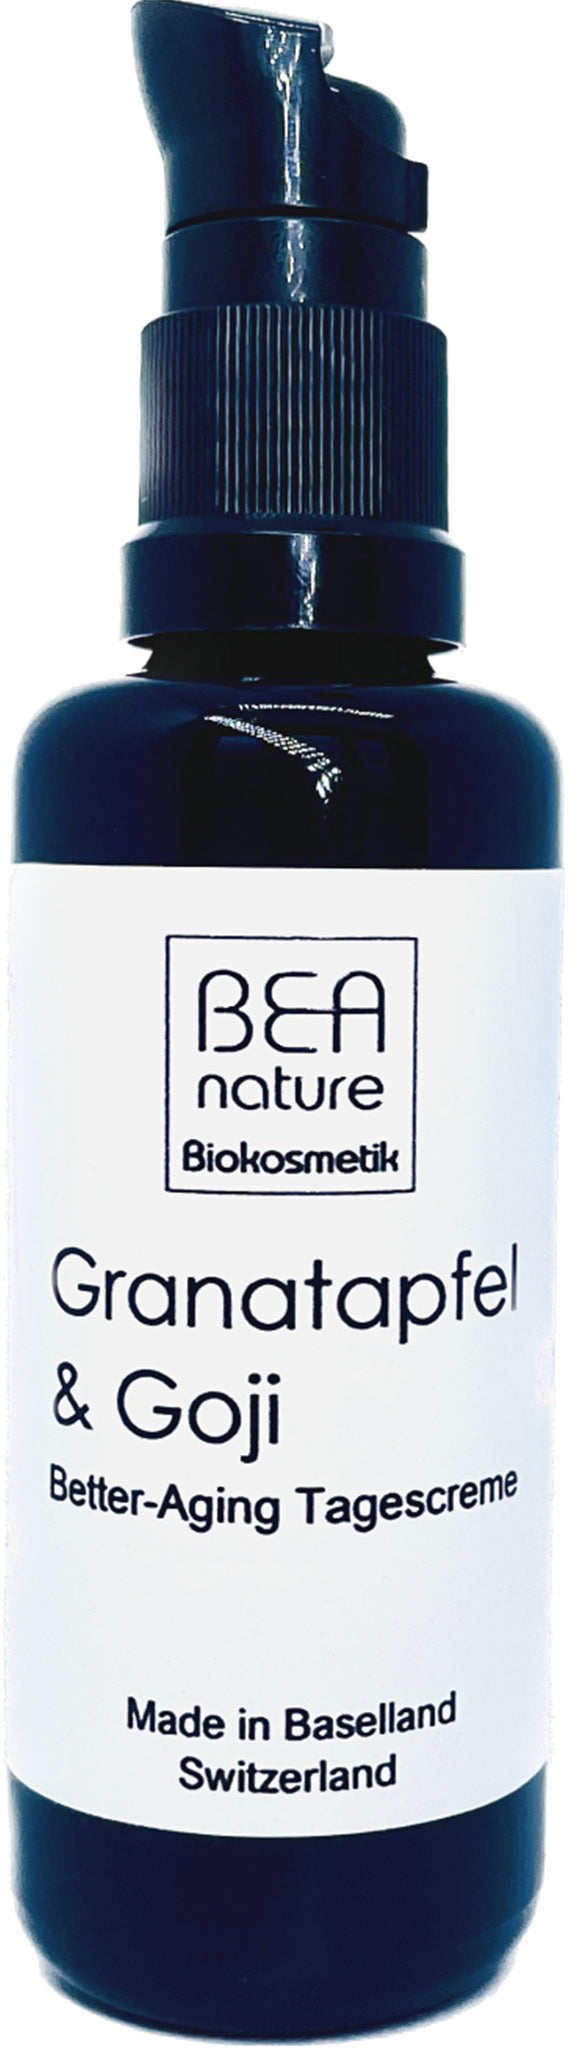 Granatapfel & Goji Better-Aging Tagescreme